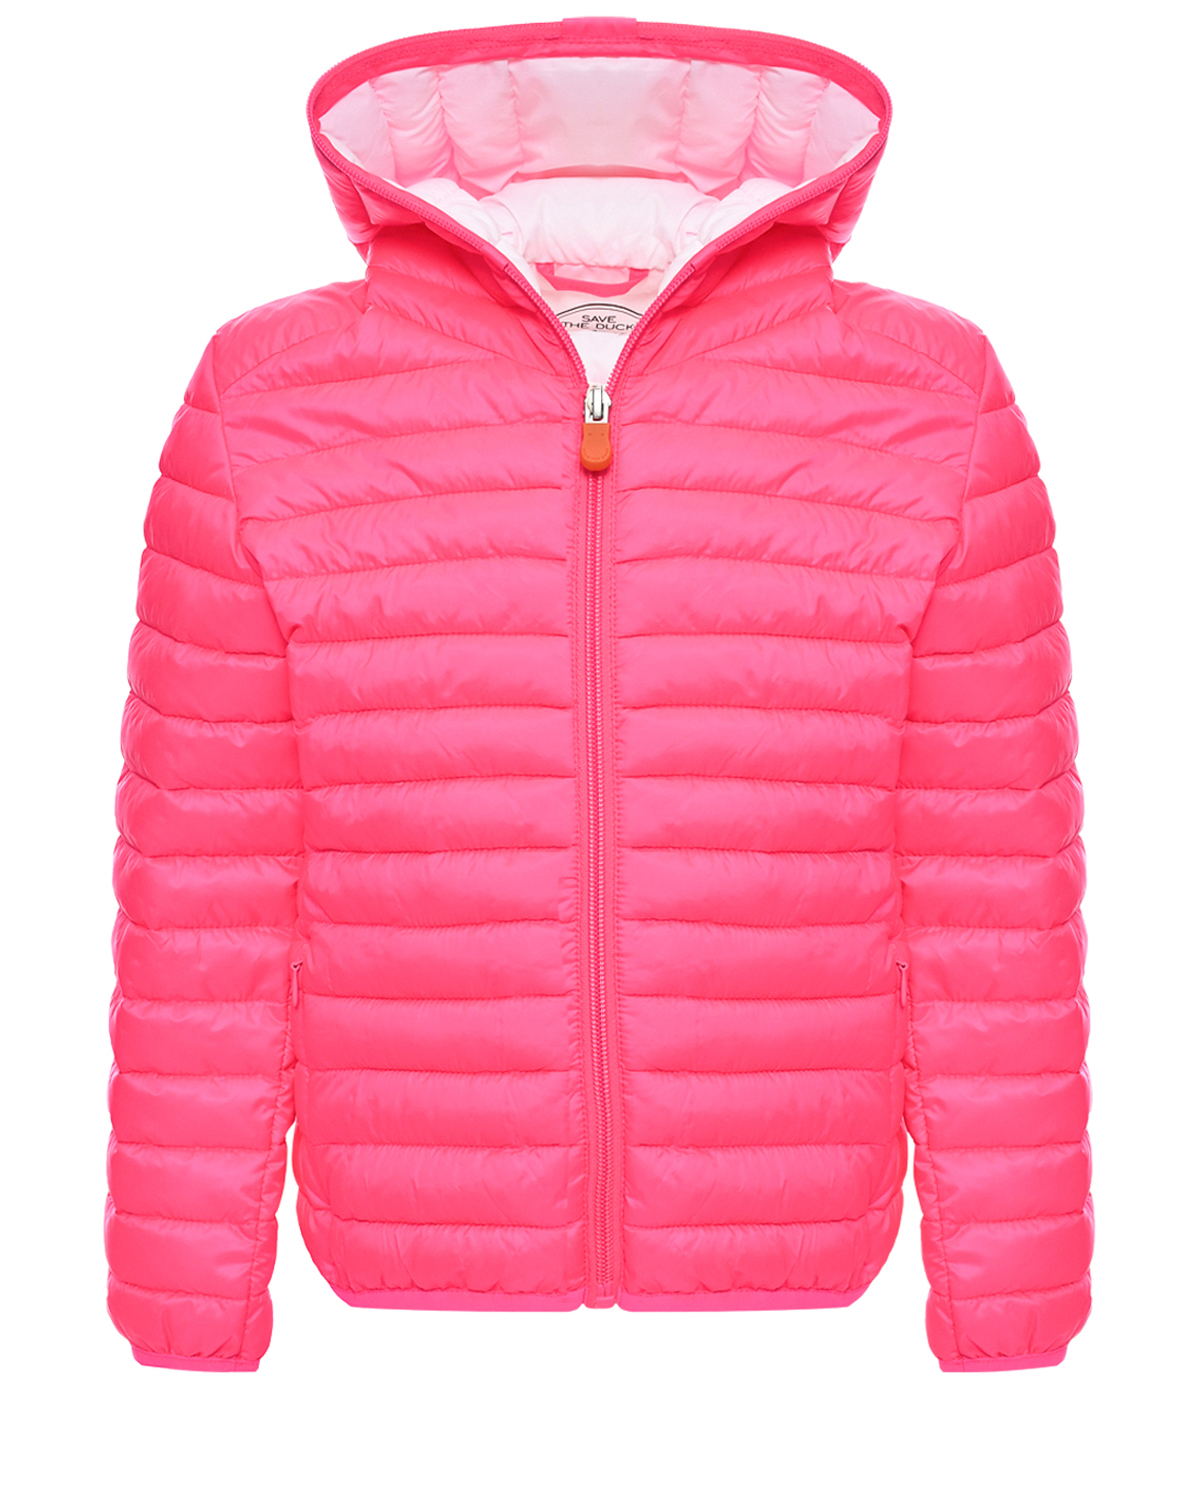 Стеганая куртка с капюшоном, розовая Save the Duck, размер 104, цвет розовый - фото 1